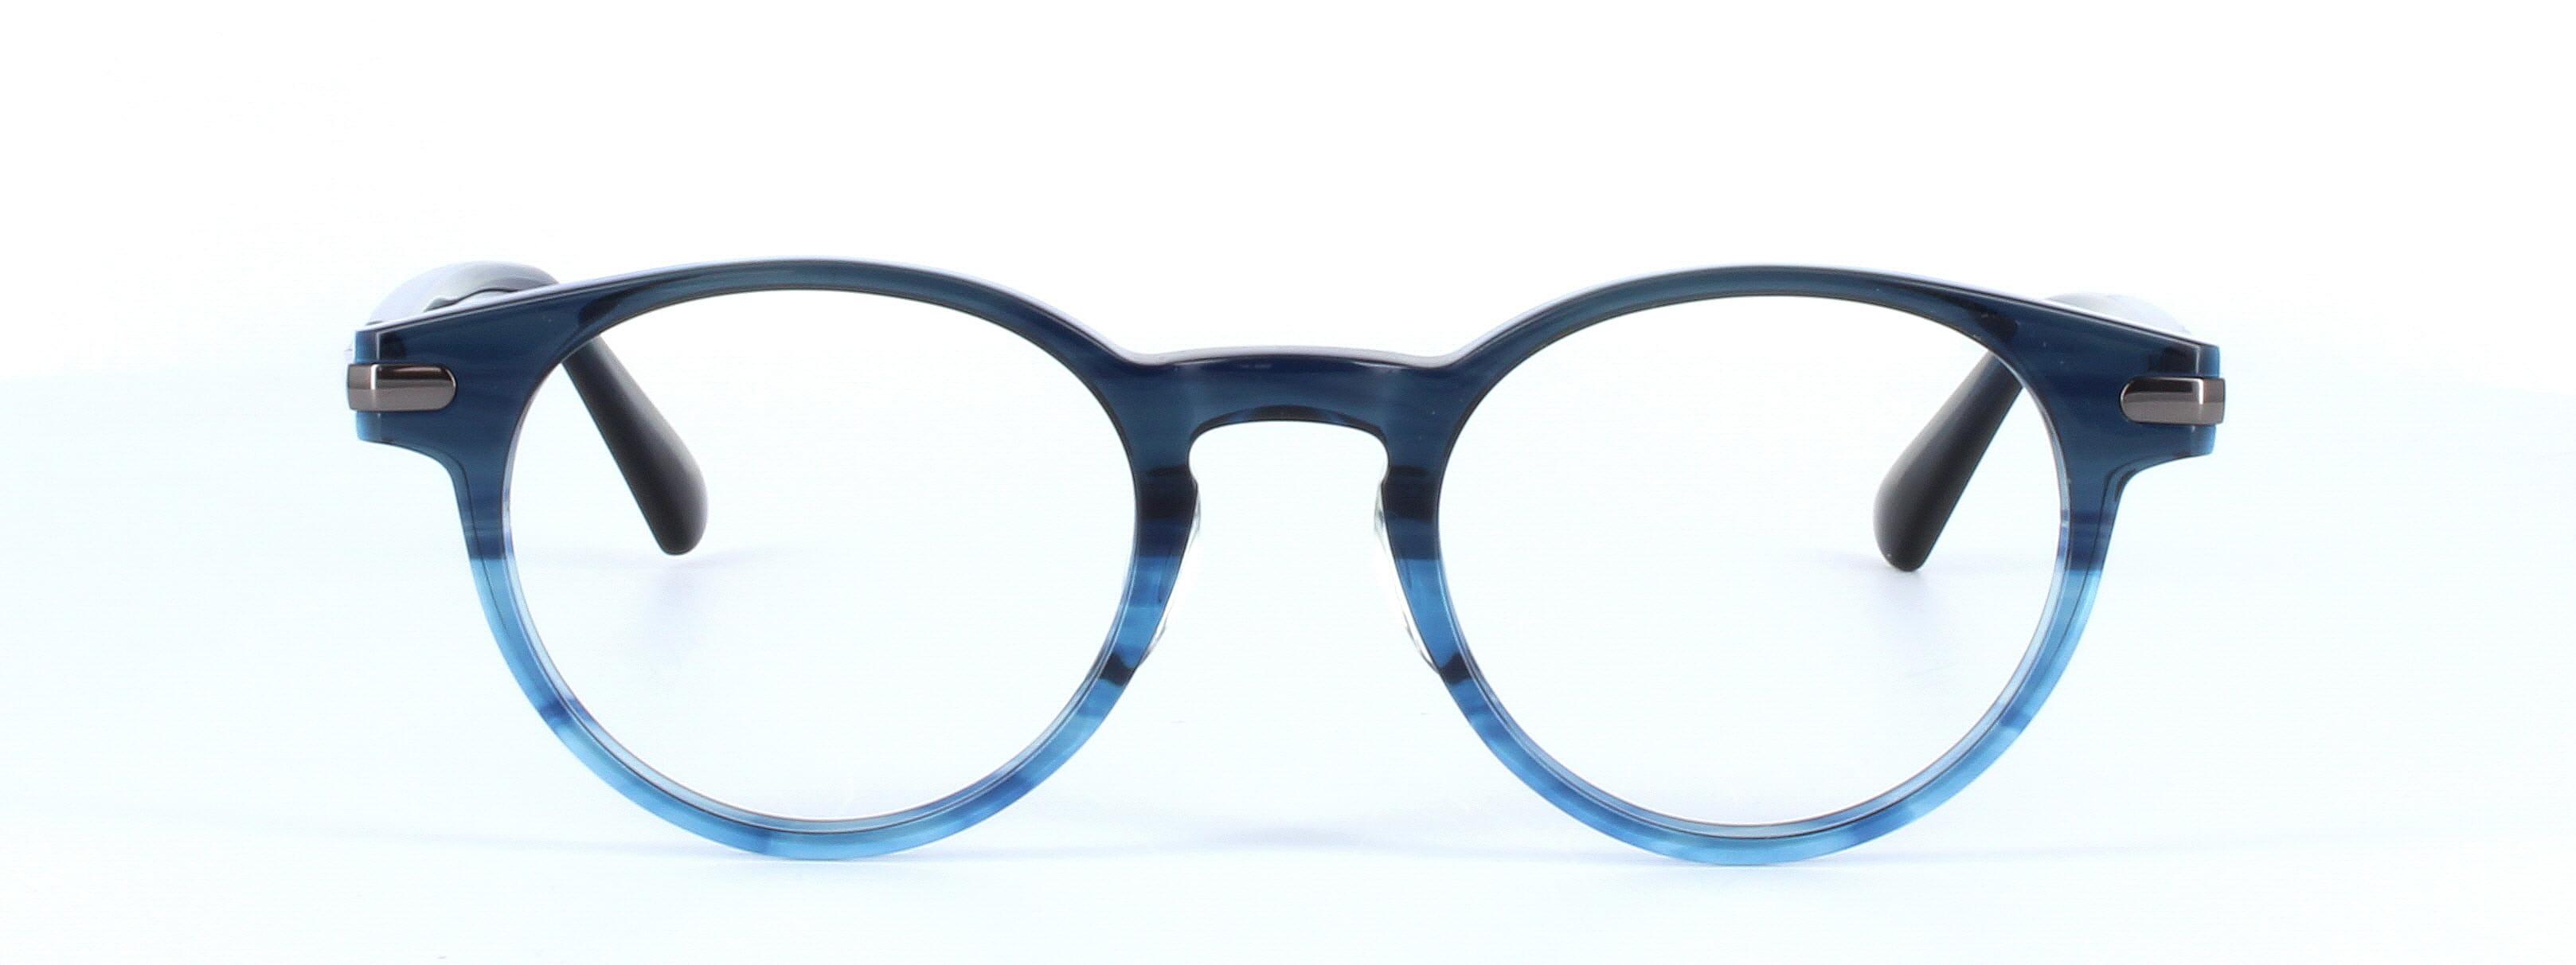 DIesel 5344 - Ladies round shaped designer glasses in blue stripe - image view 5